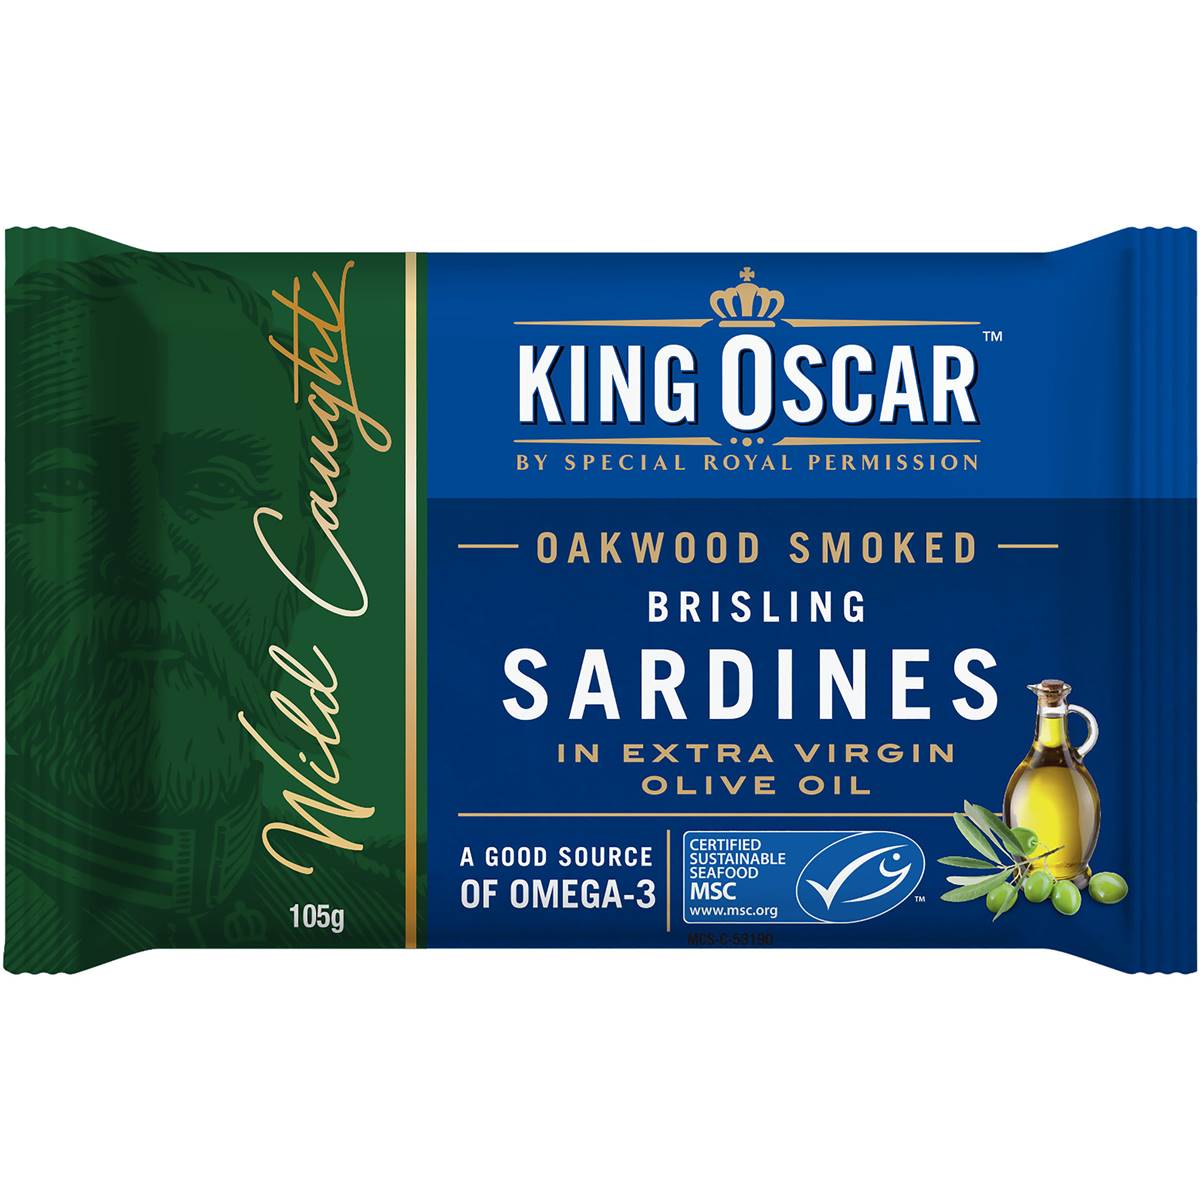 King Oscar Sardines Olive Oil Double Layer